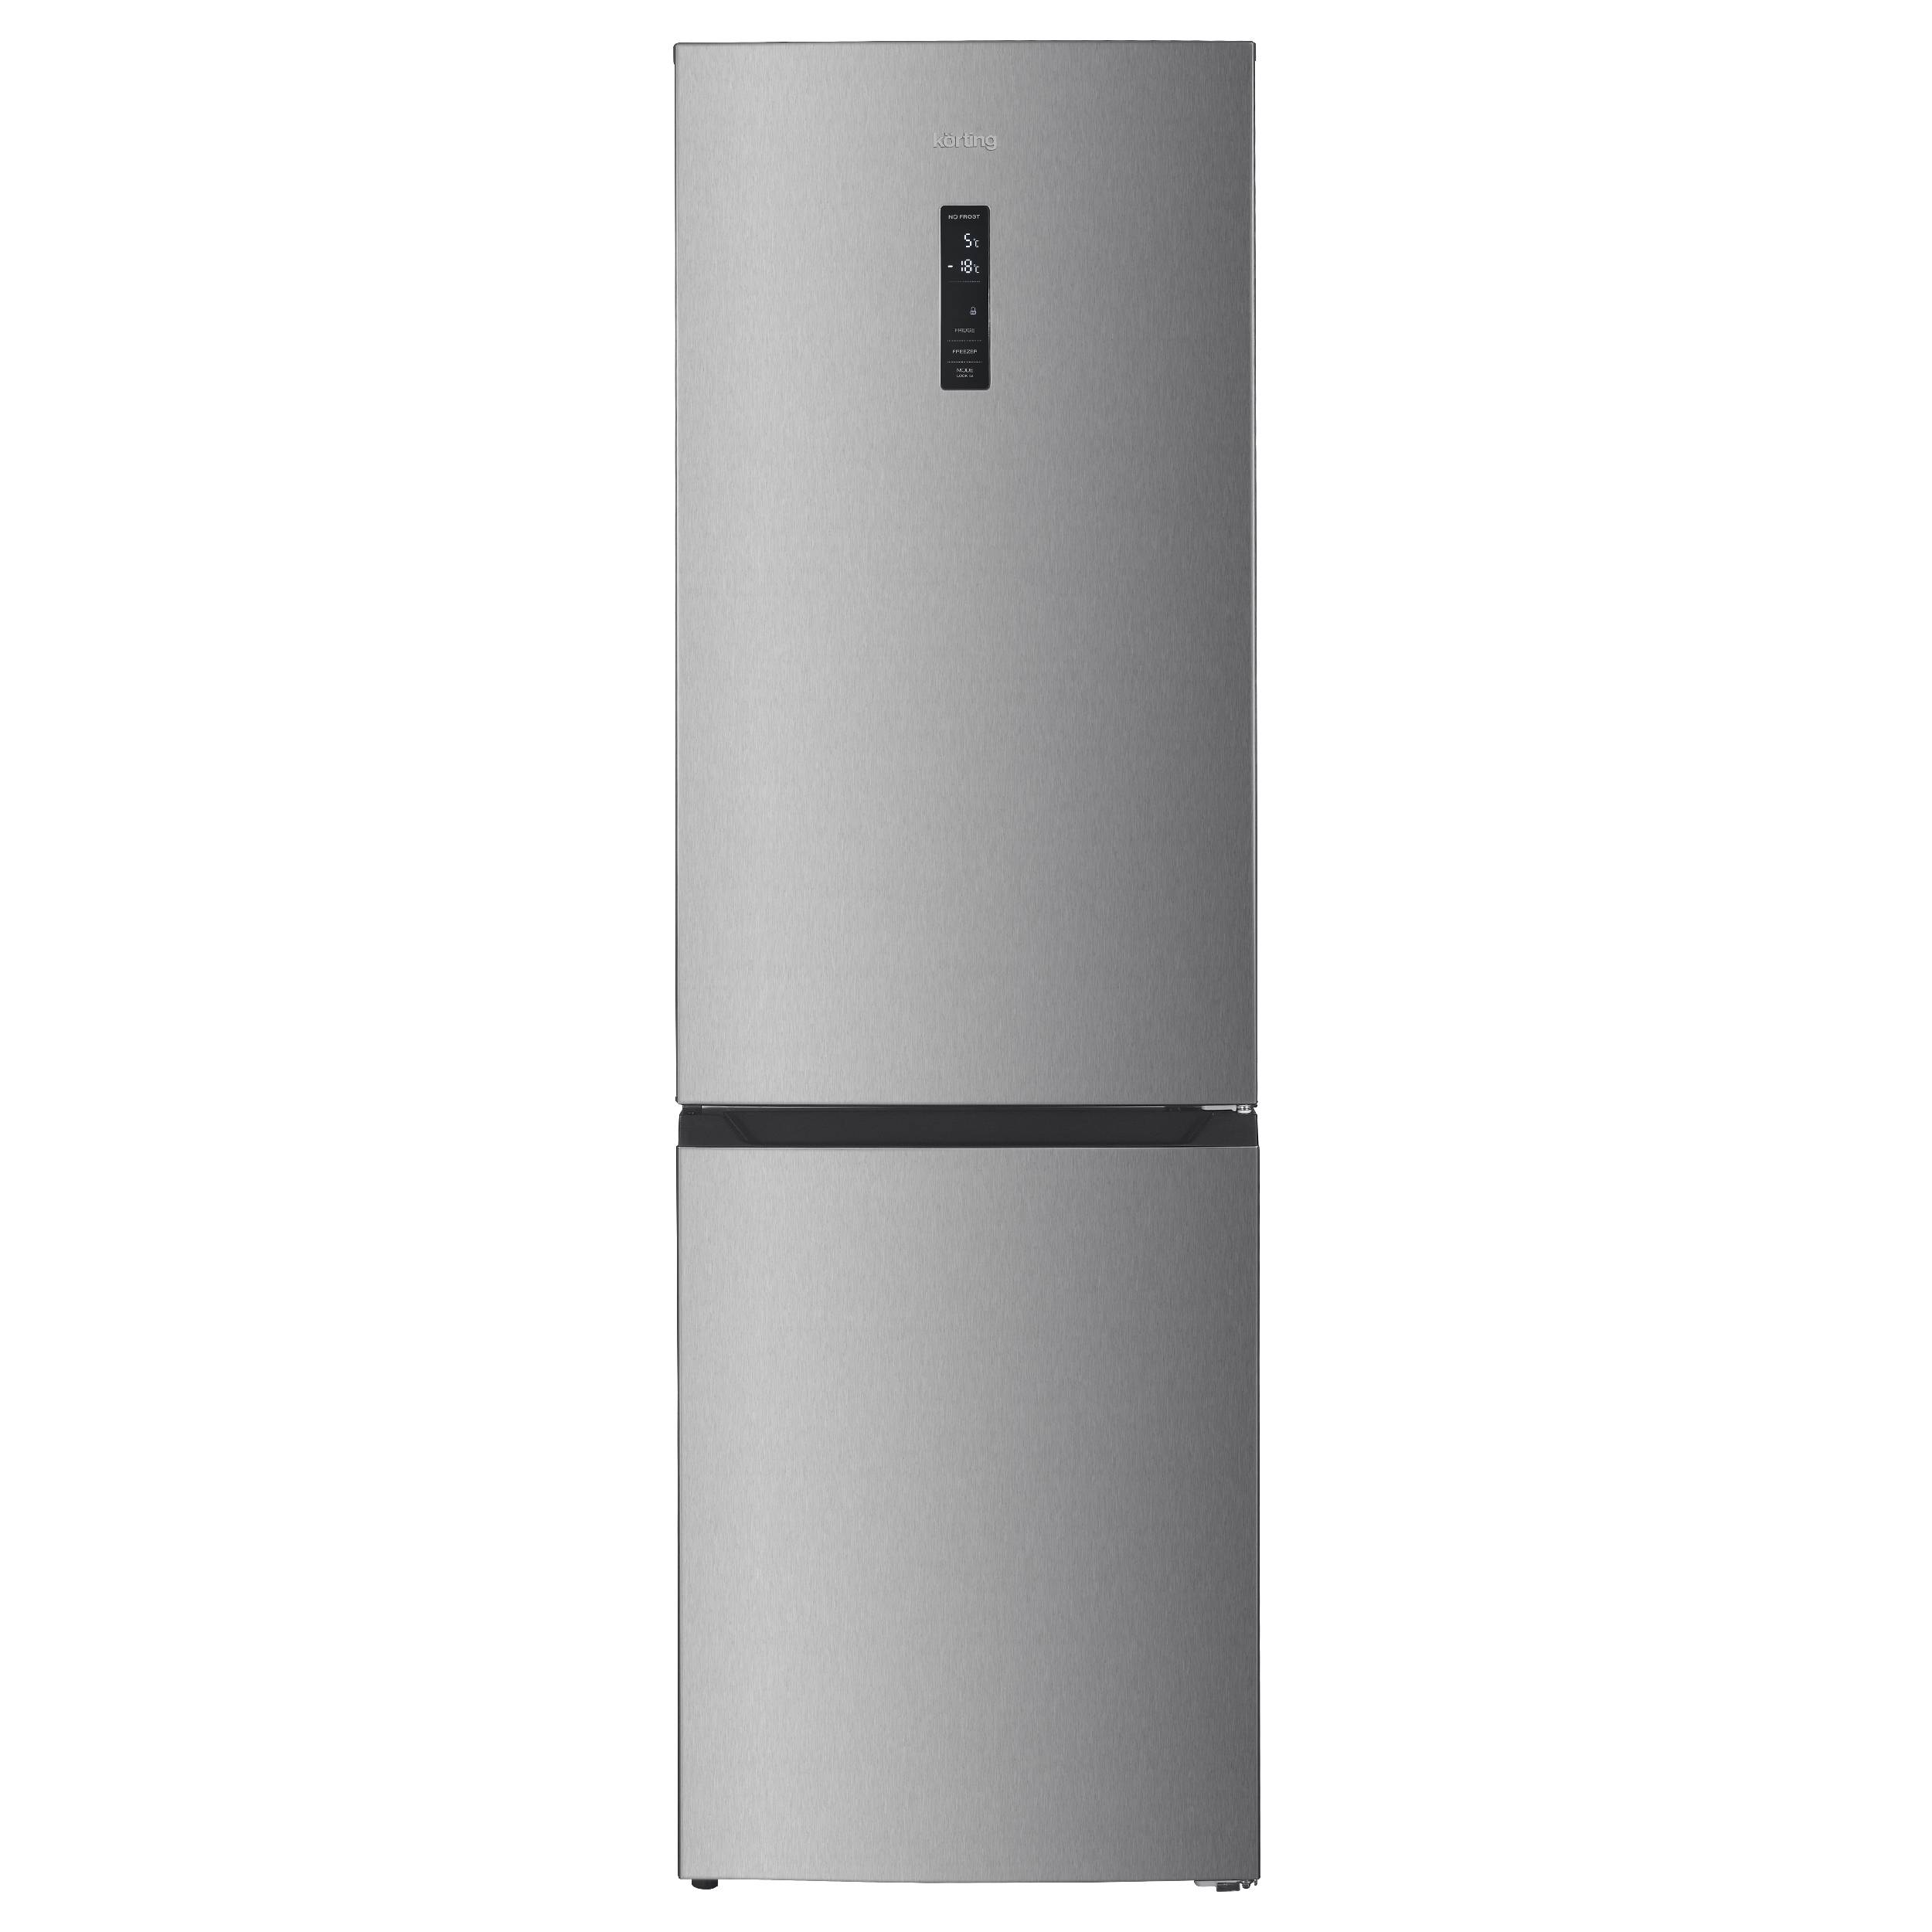 Холодильник Korting KNFC 62980 X серебристый, серый холодильник don r 216 серый